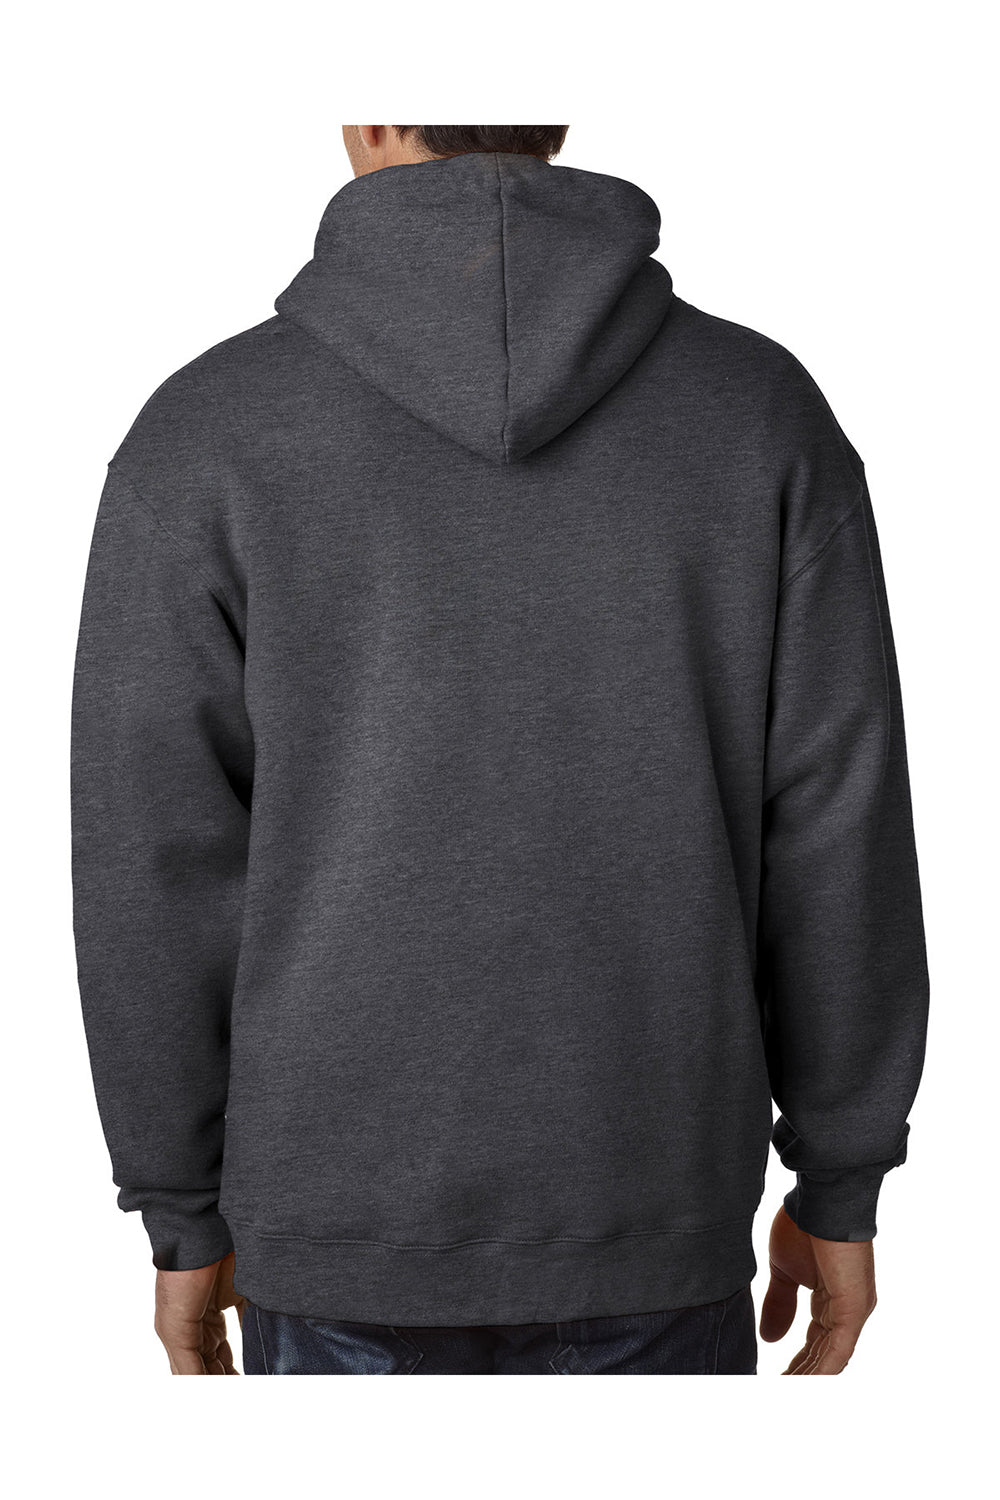 Bayside BA900 Mens USA Made Full Zip Hooded Sweatshirt Hoodie Heather Charcoal Grey Model Back